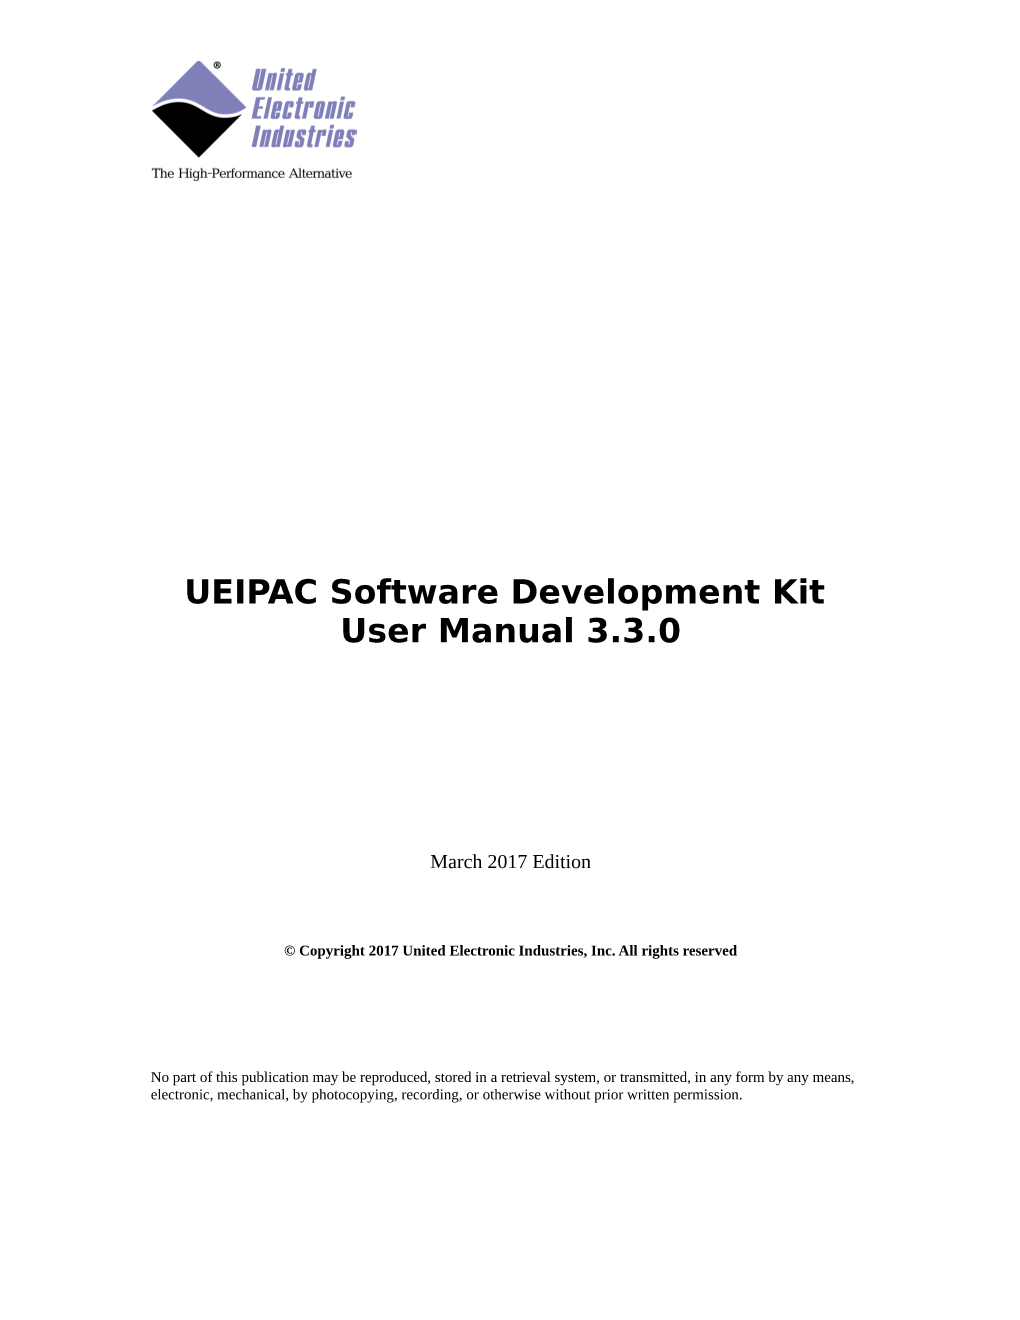 UEIPAC Software Development Kit User Manual 3.3.0